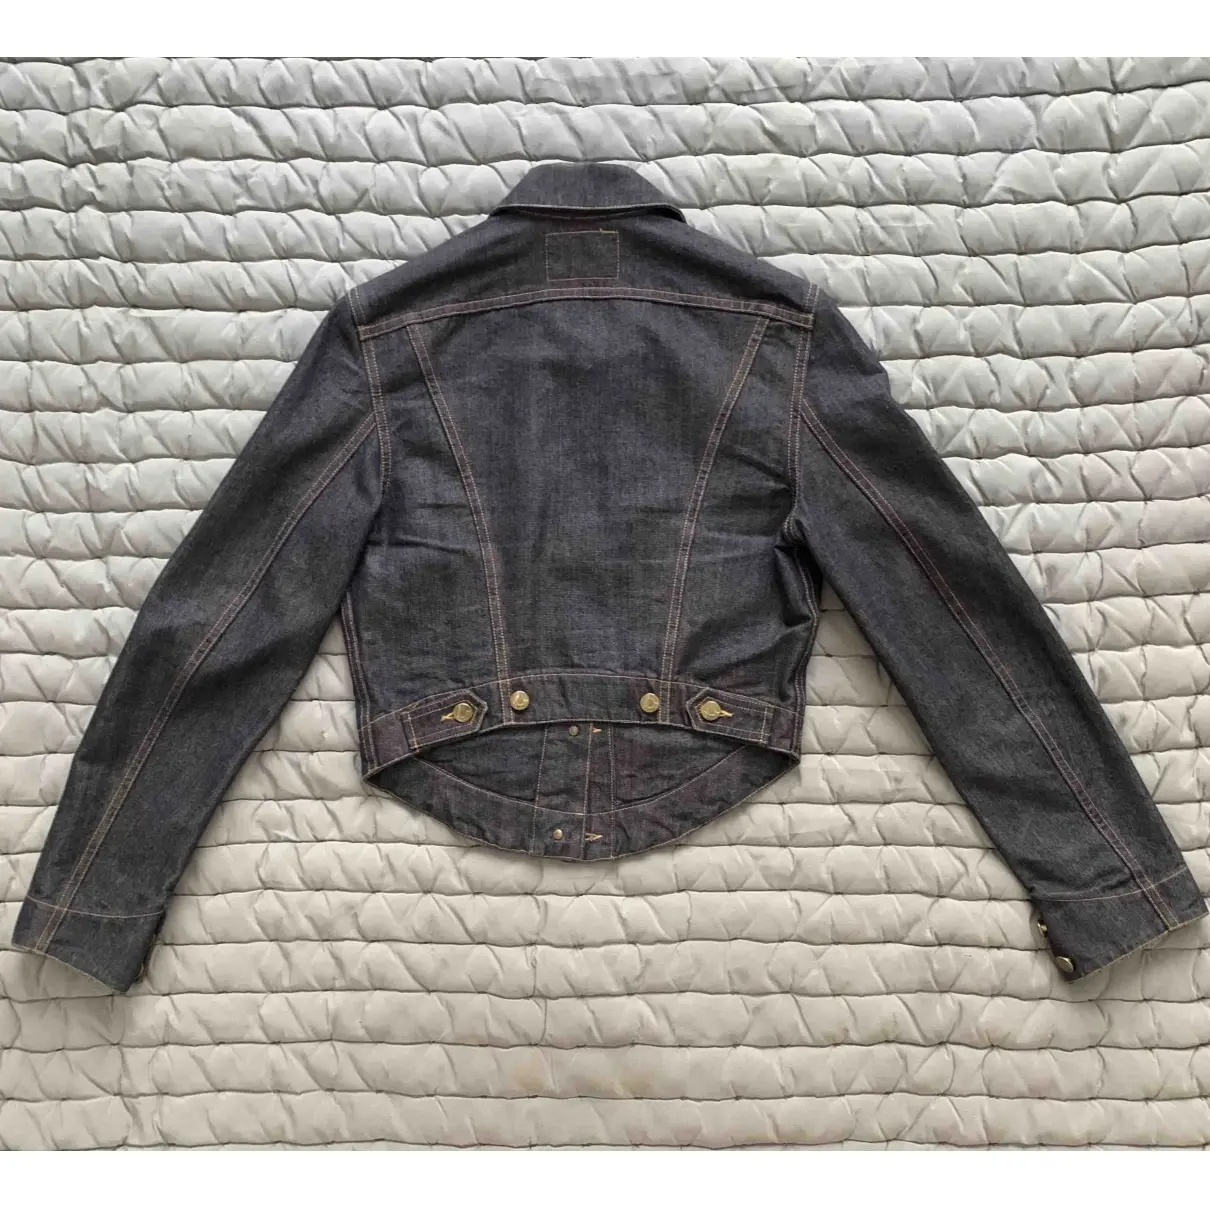 Vivienne Westwood Anglomania Jacket for sale - Vintage